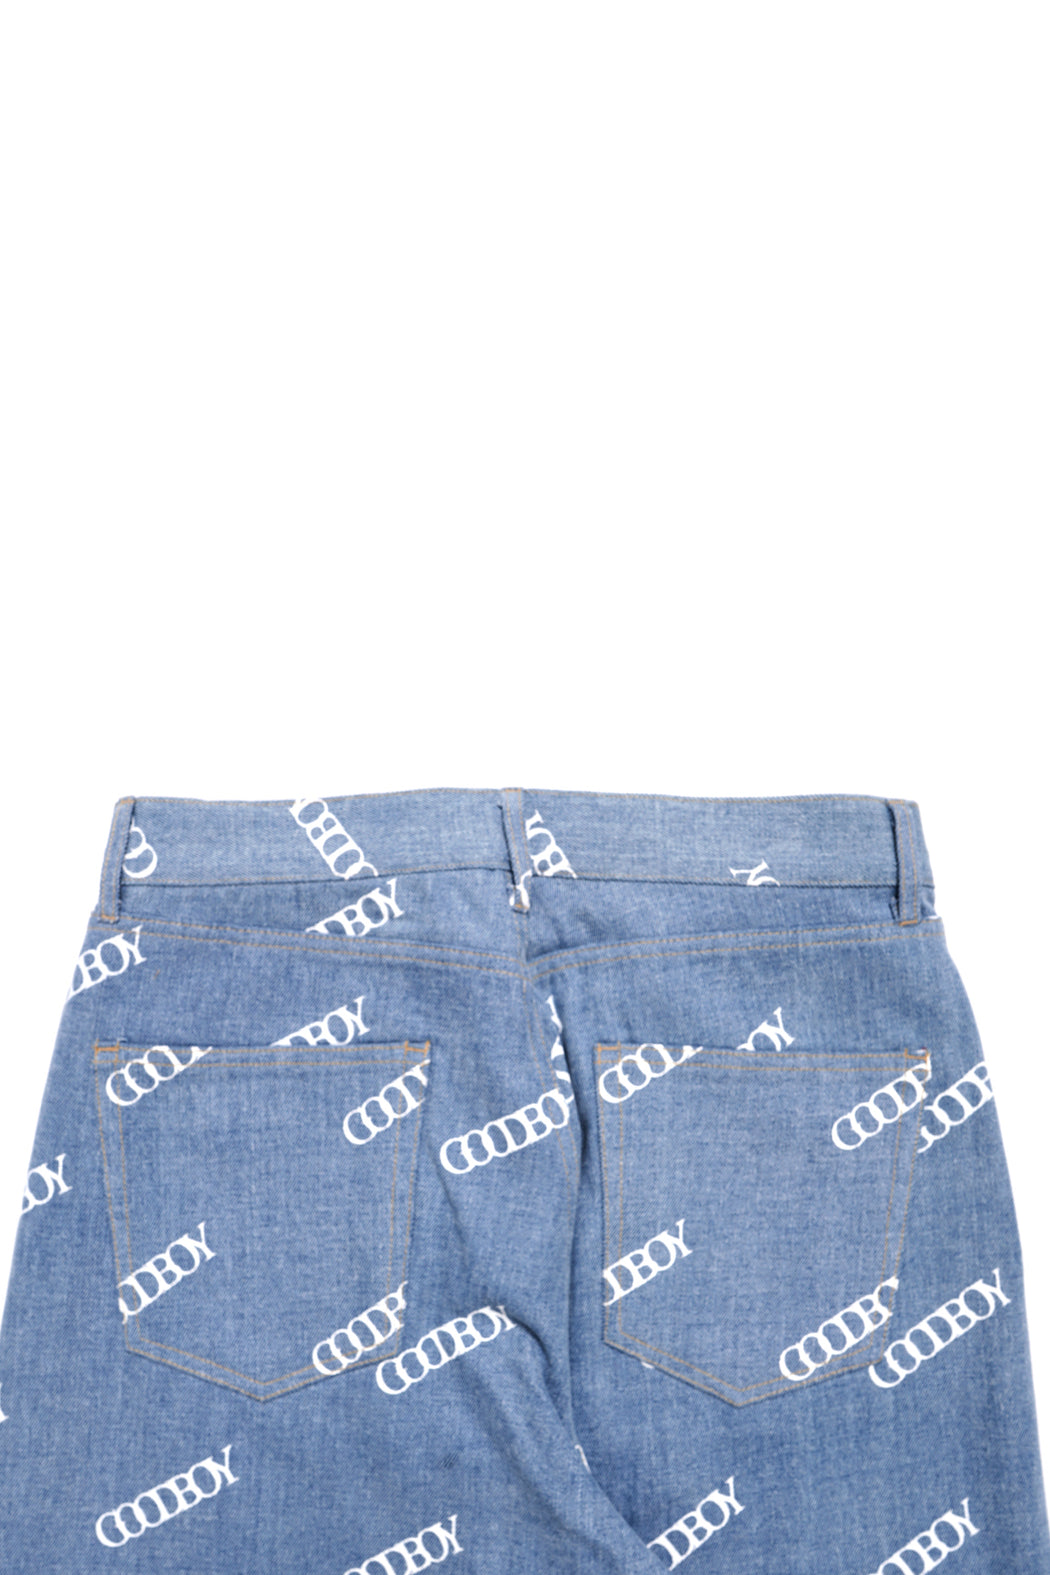 Goodboy Printed Denim Pants - Blue